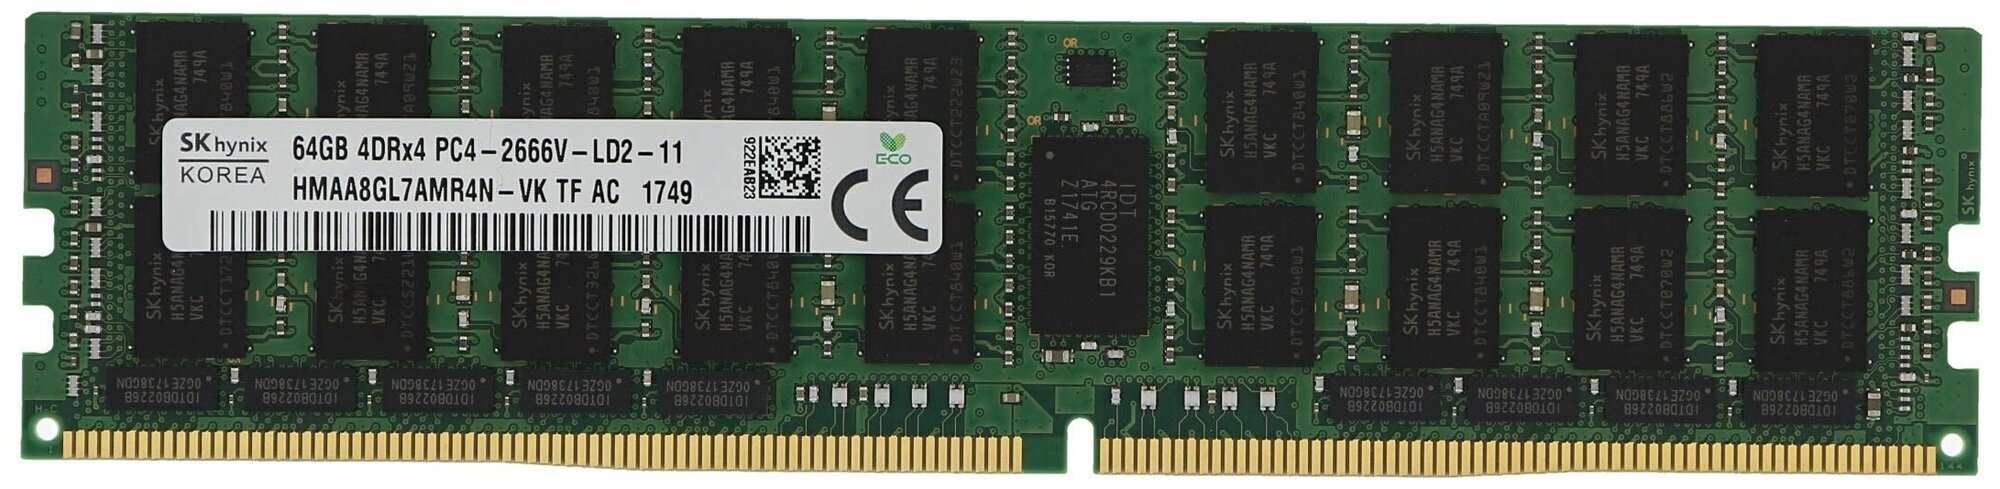 Оперативная память HYNIX DDR4_LR 64GB 21300(2666MHz) REG [HMAA8GL7AMR4N-VK] HMAA8GL7AMR4N-VK